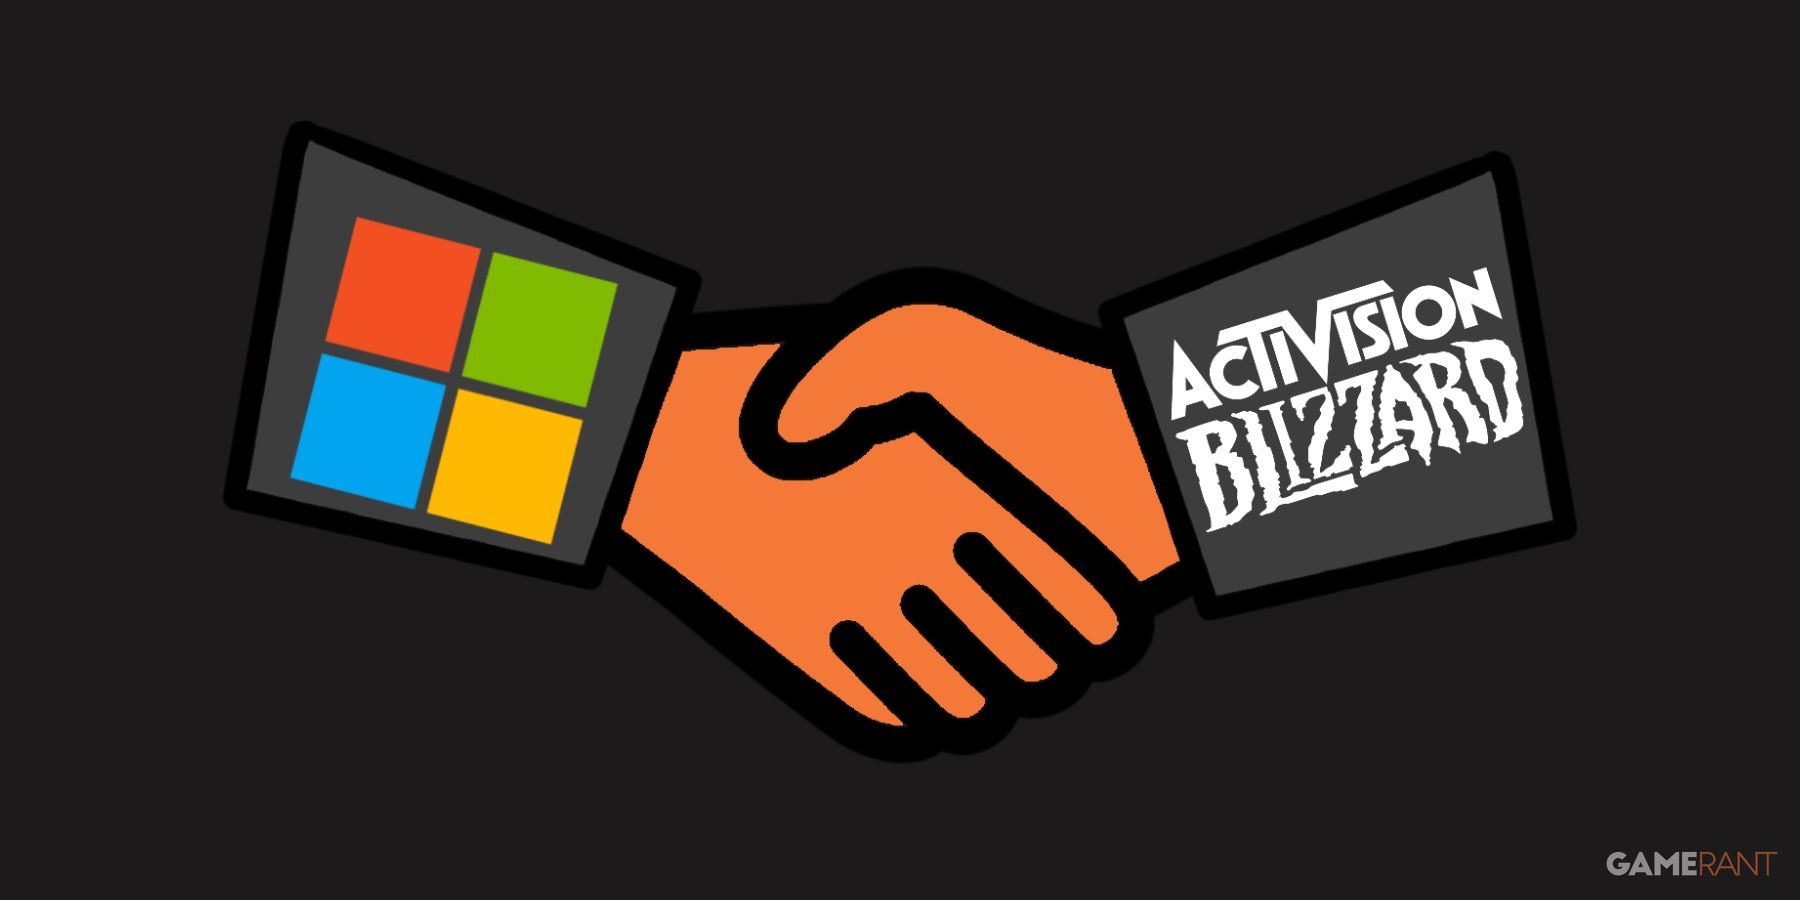 Group Behind Activision Blizzard Union-Busting Lawsuit
Contacts EU Regulators About Microsoft Acquisition